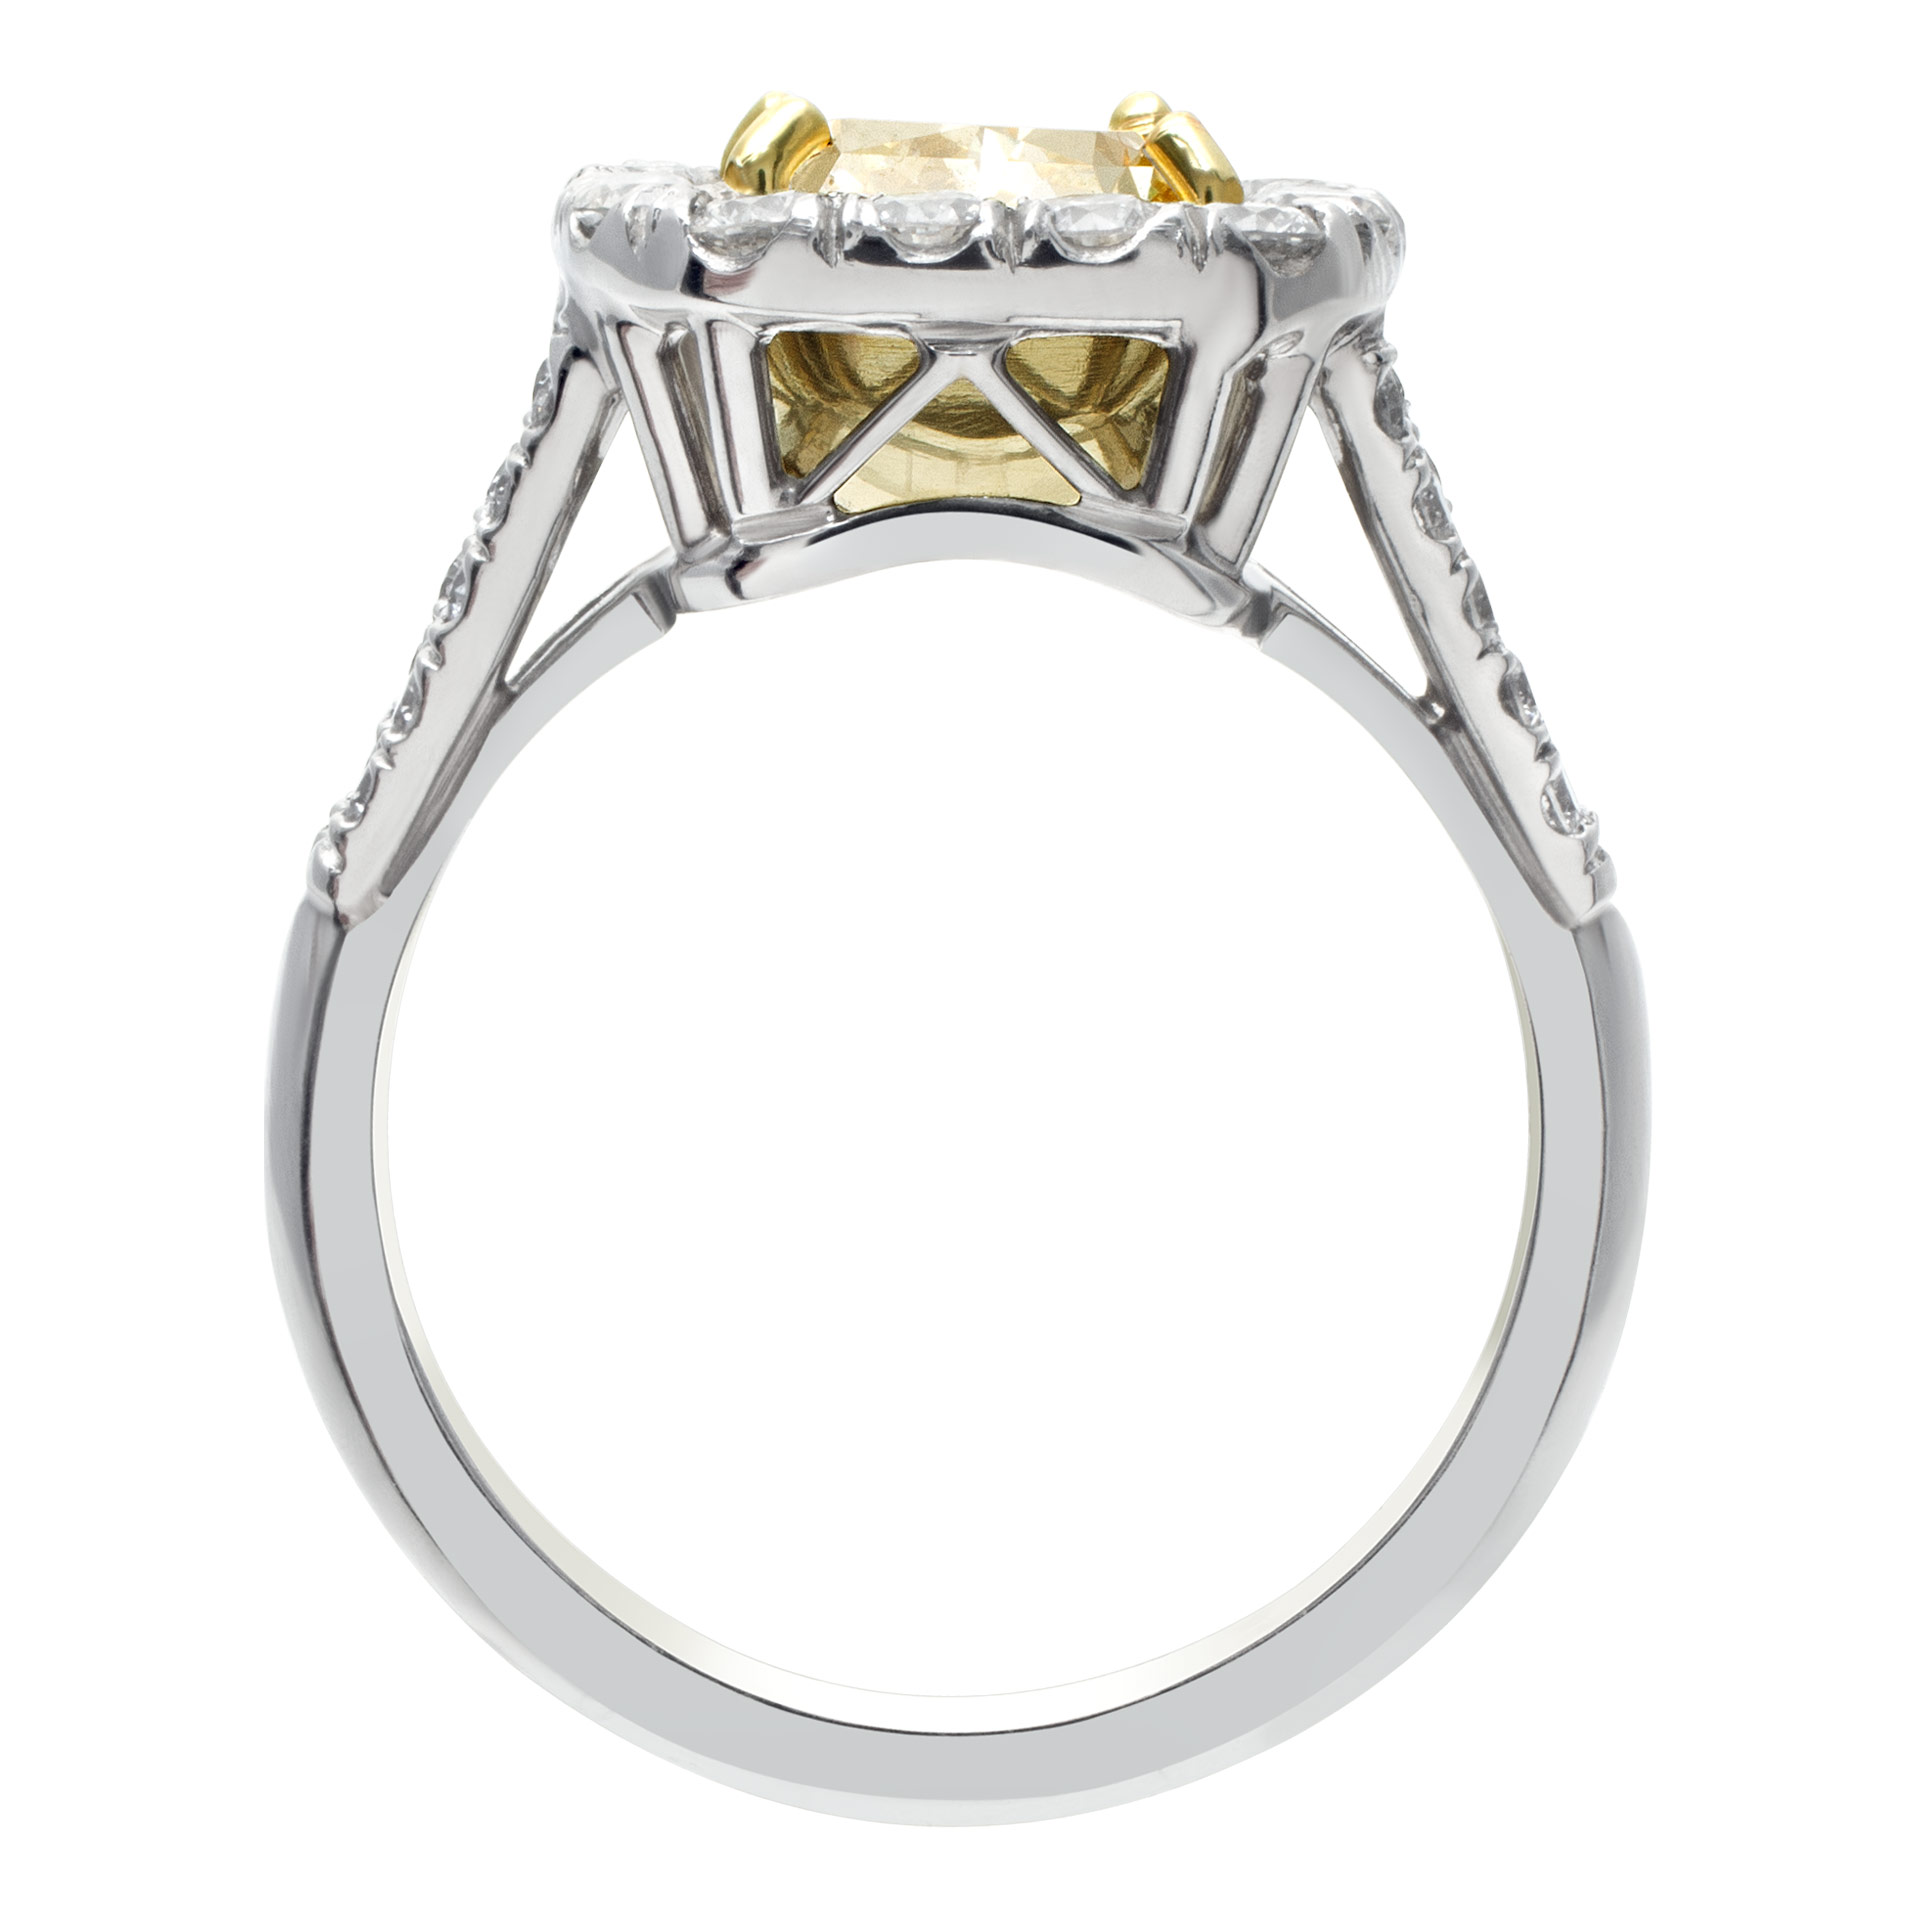 GIA certified 3.02 ct diamond ring fancy light yellow VVS2 clarity image 3